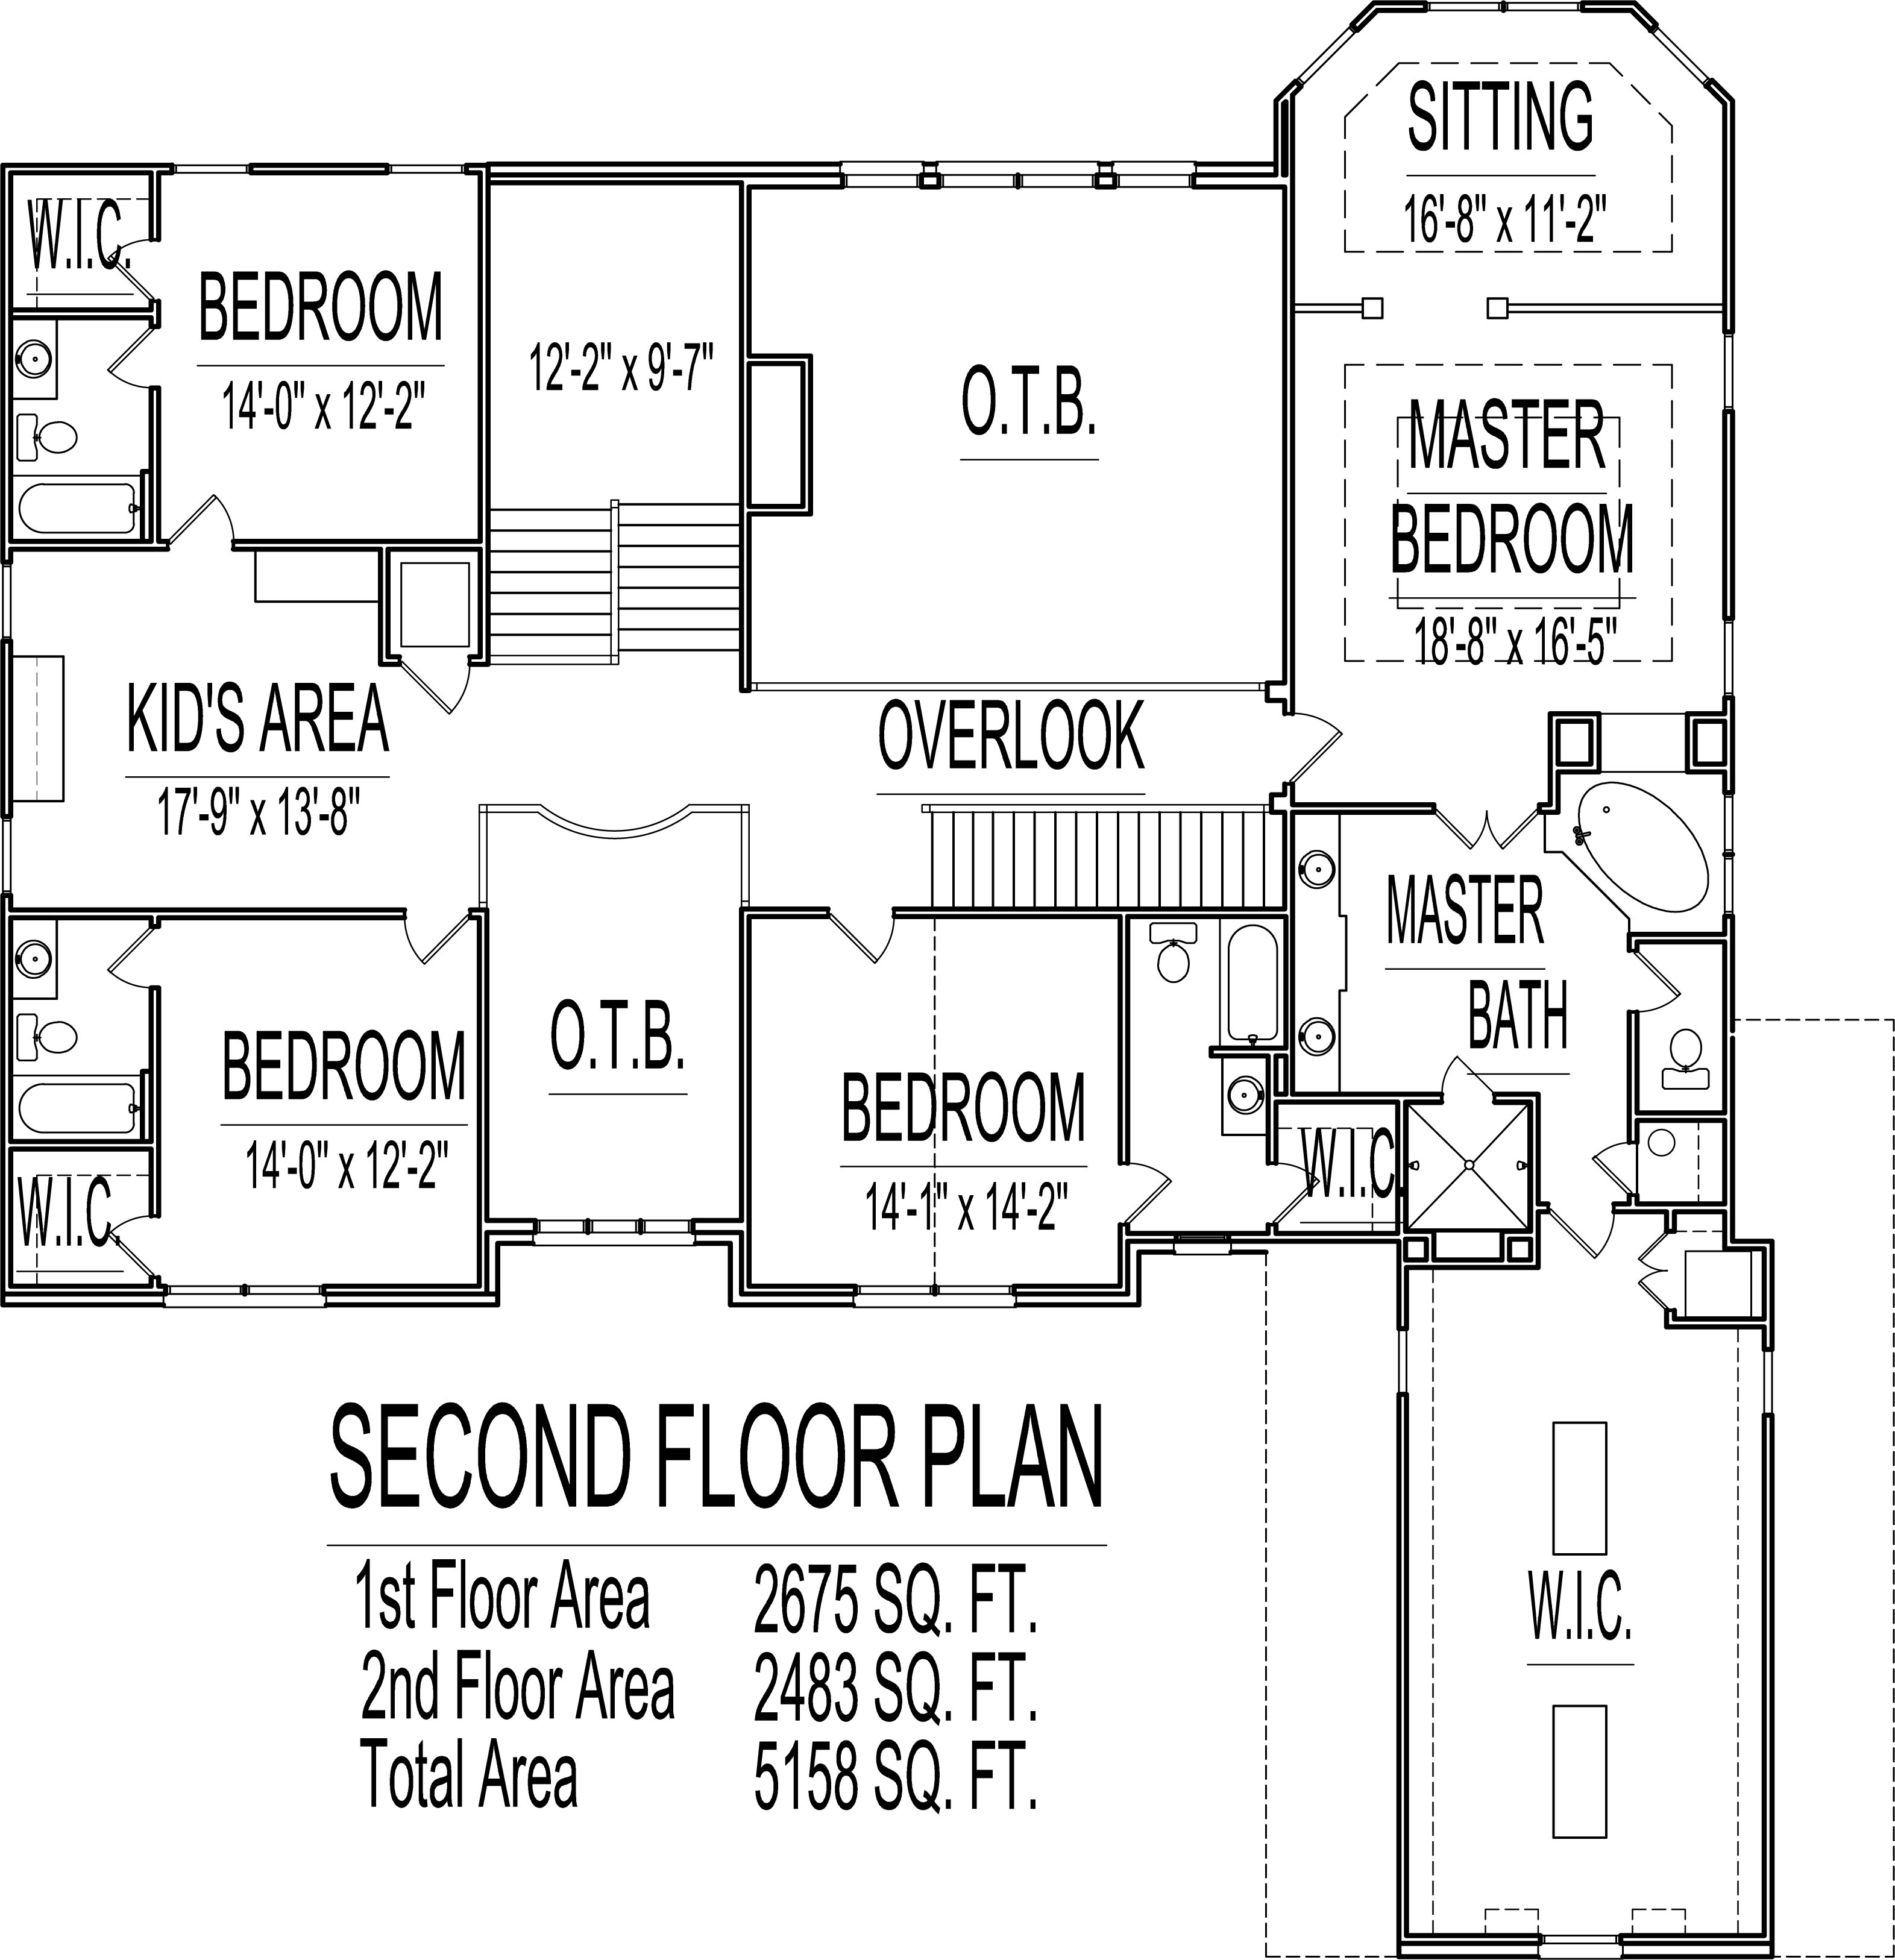 5000 Sq Ft House Floor Plans 5 Bedroom 2 Story Designs Blueprints Architectural design in cedar creek estate by archid architecture. duplex house plans